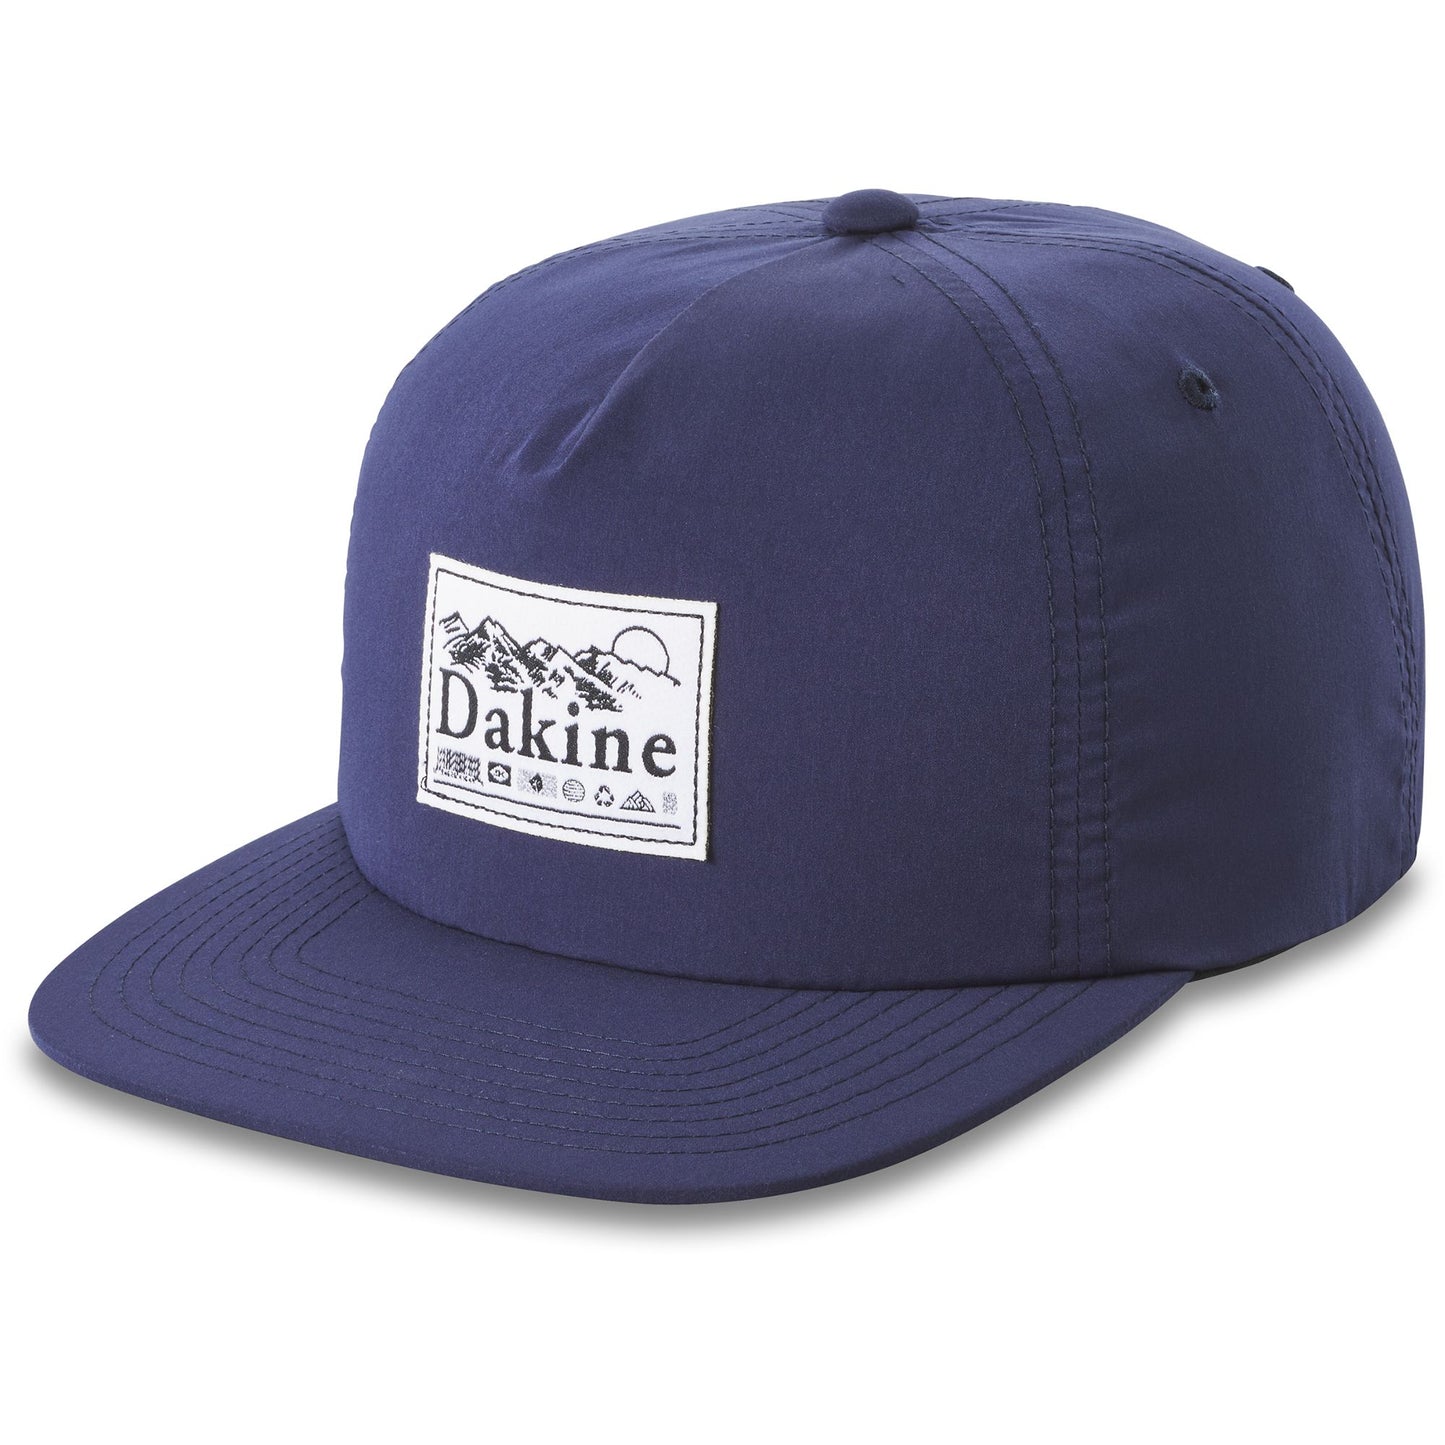 Dakine Switchback Ball Cap Navy OS - Dakine Hats